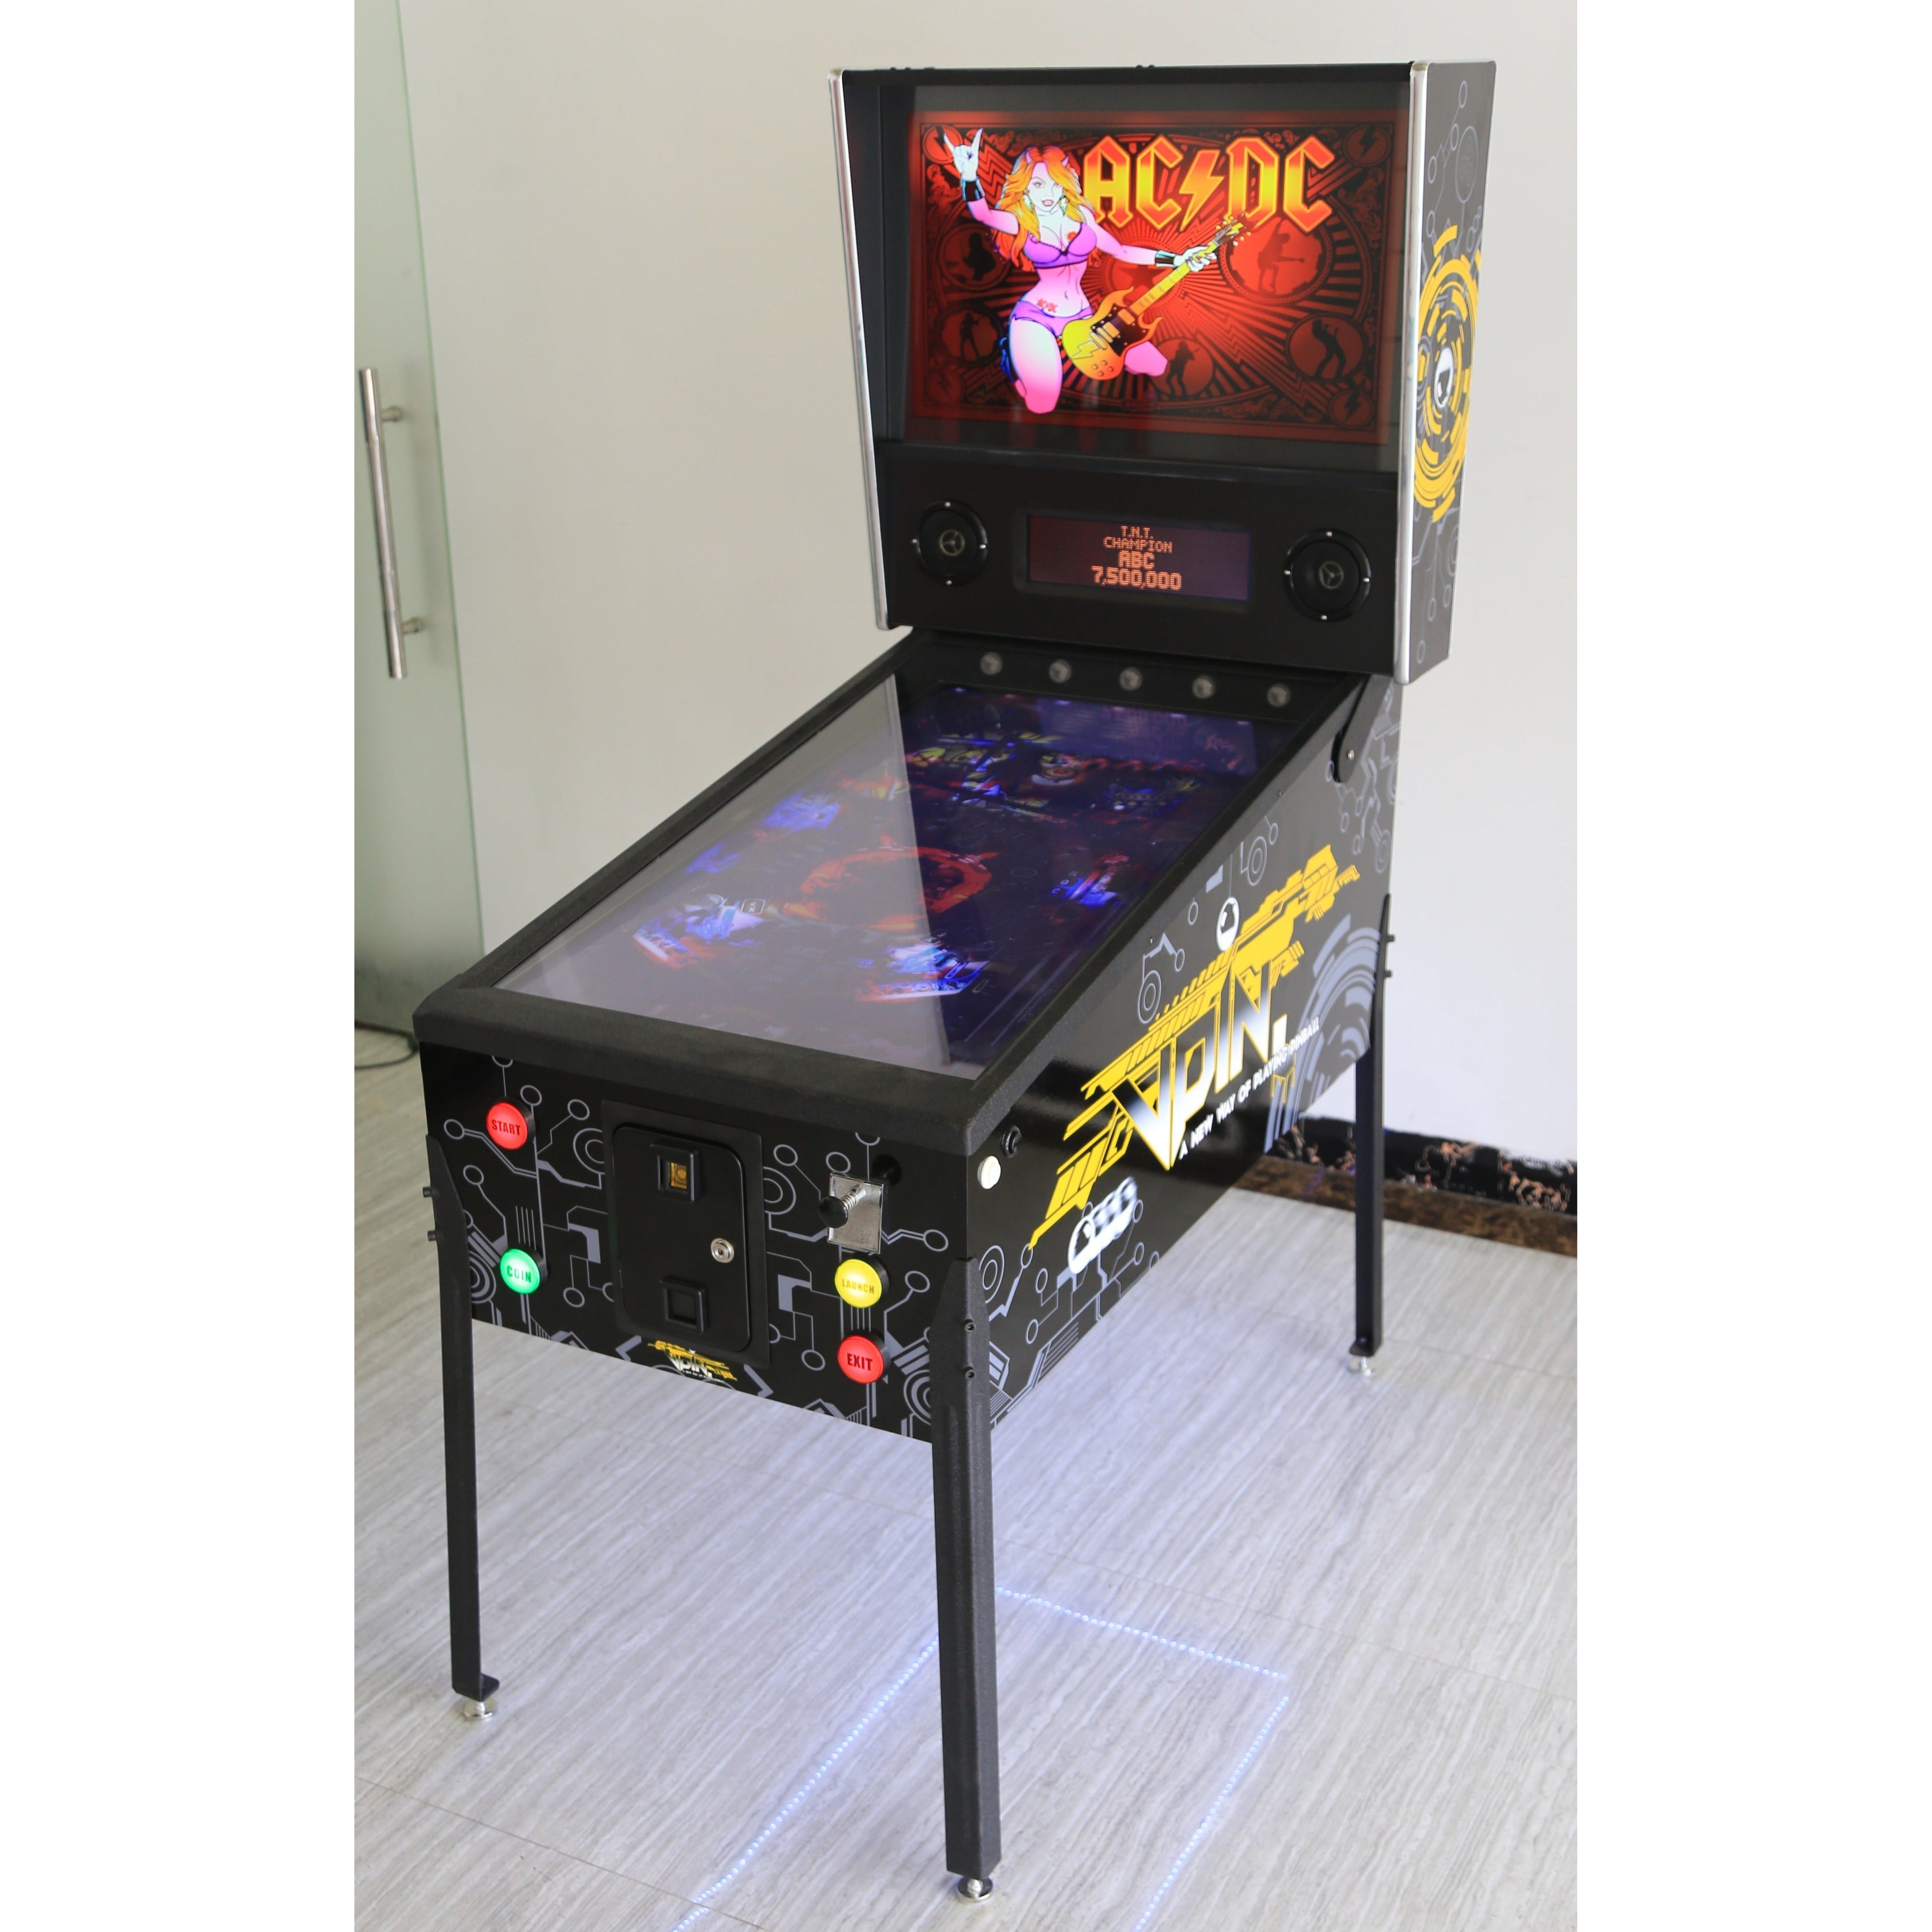 Pinball Digital Virtual - Arcade Play Games